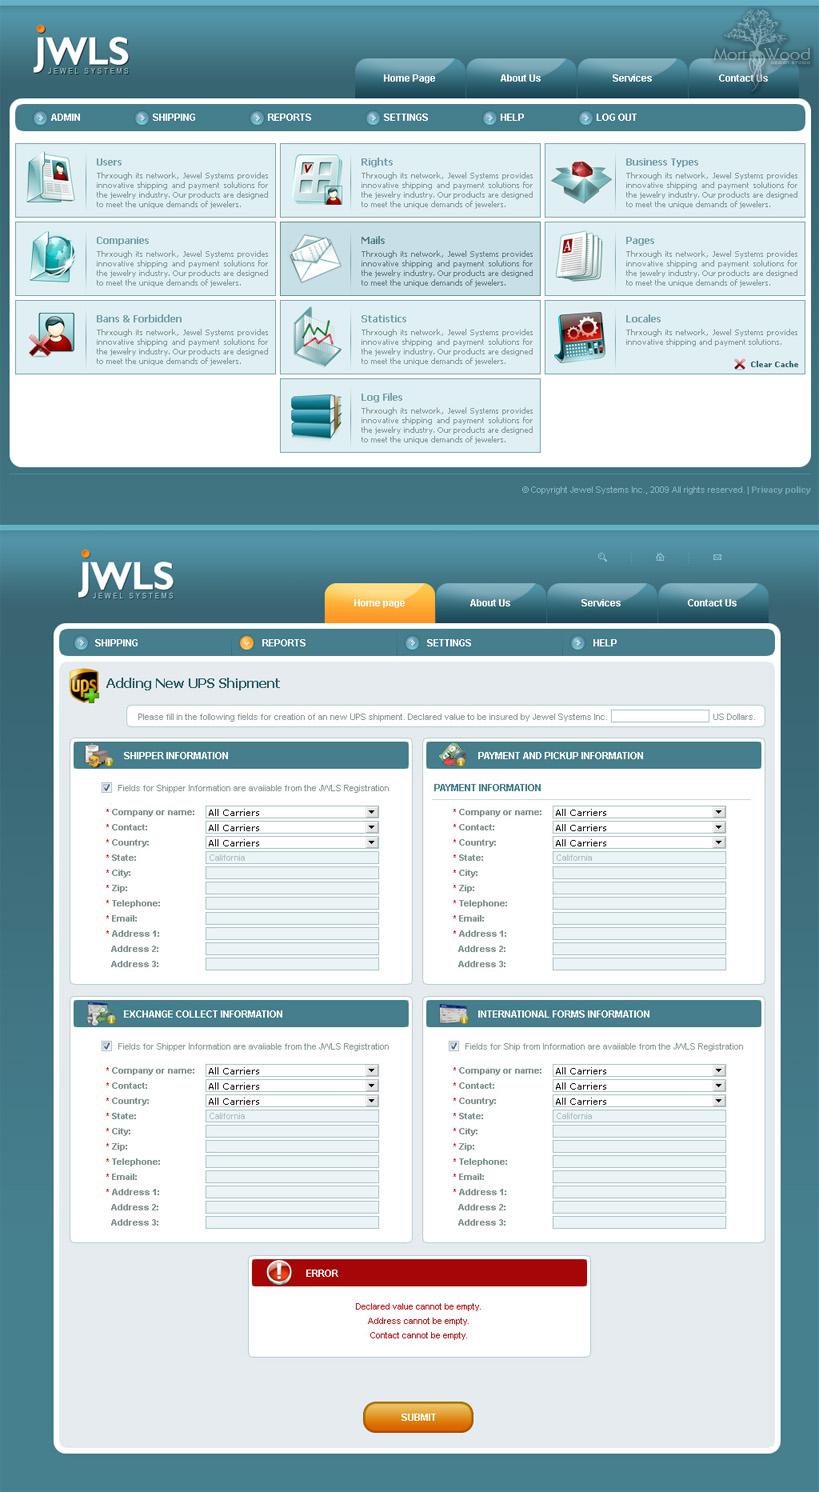 JWLS - юридические услуги в интернете, сопровождение грузов